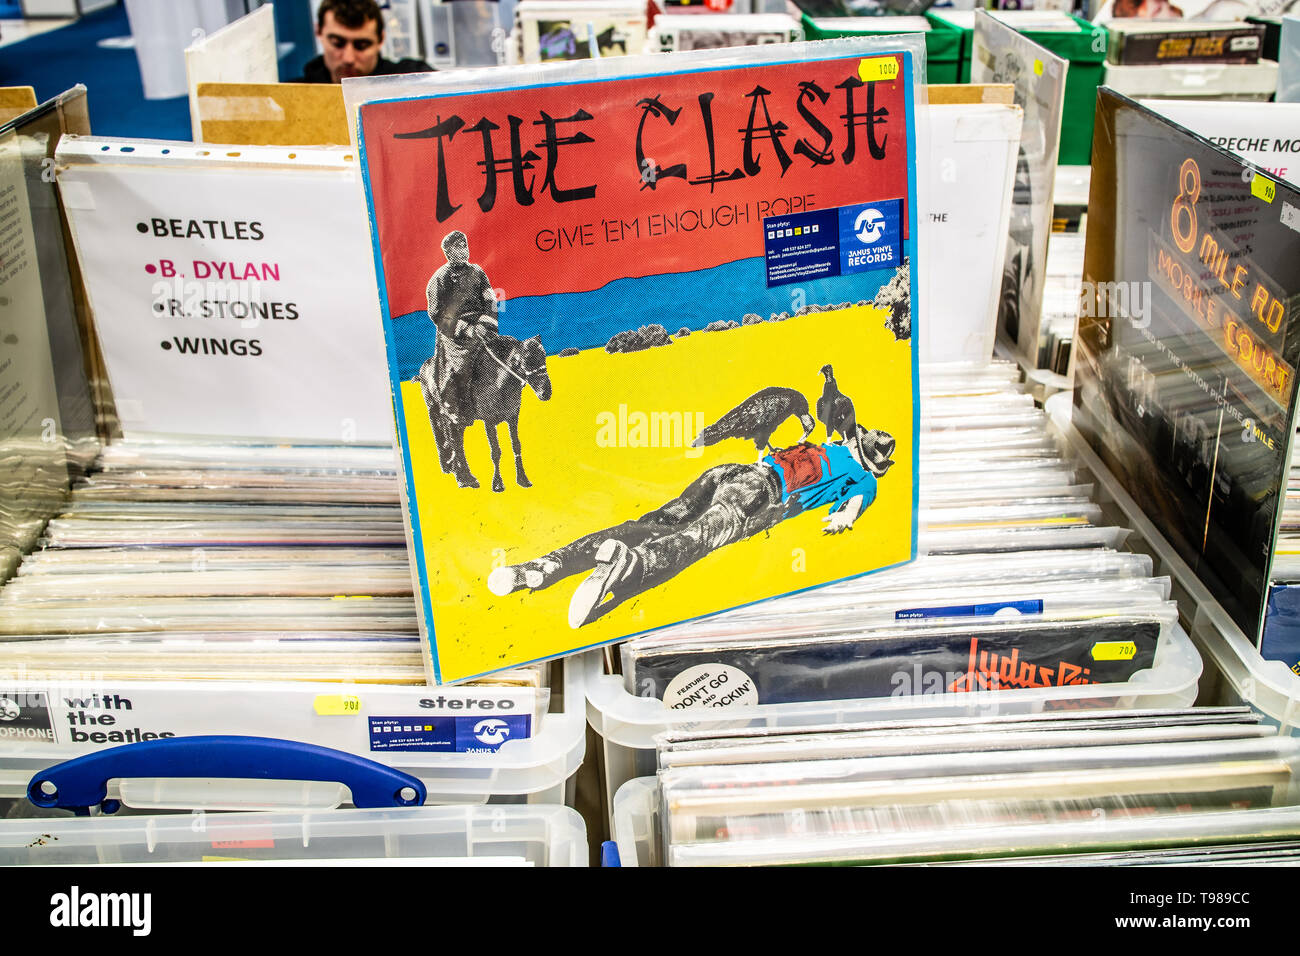 Nadarzyn, Poland, May 11, 2019 The Clash vinyl album on display for sale, Vinyl, LP, Album, Rock, English rock band, collection of Vinyls Stock Photo